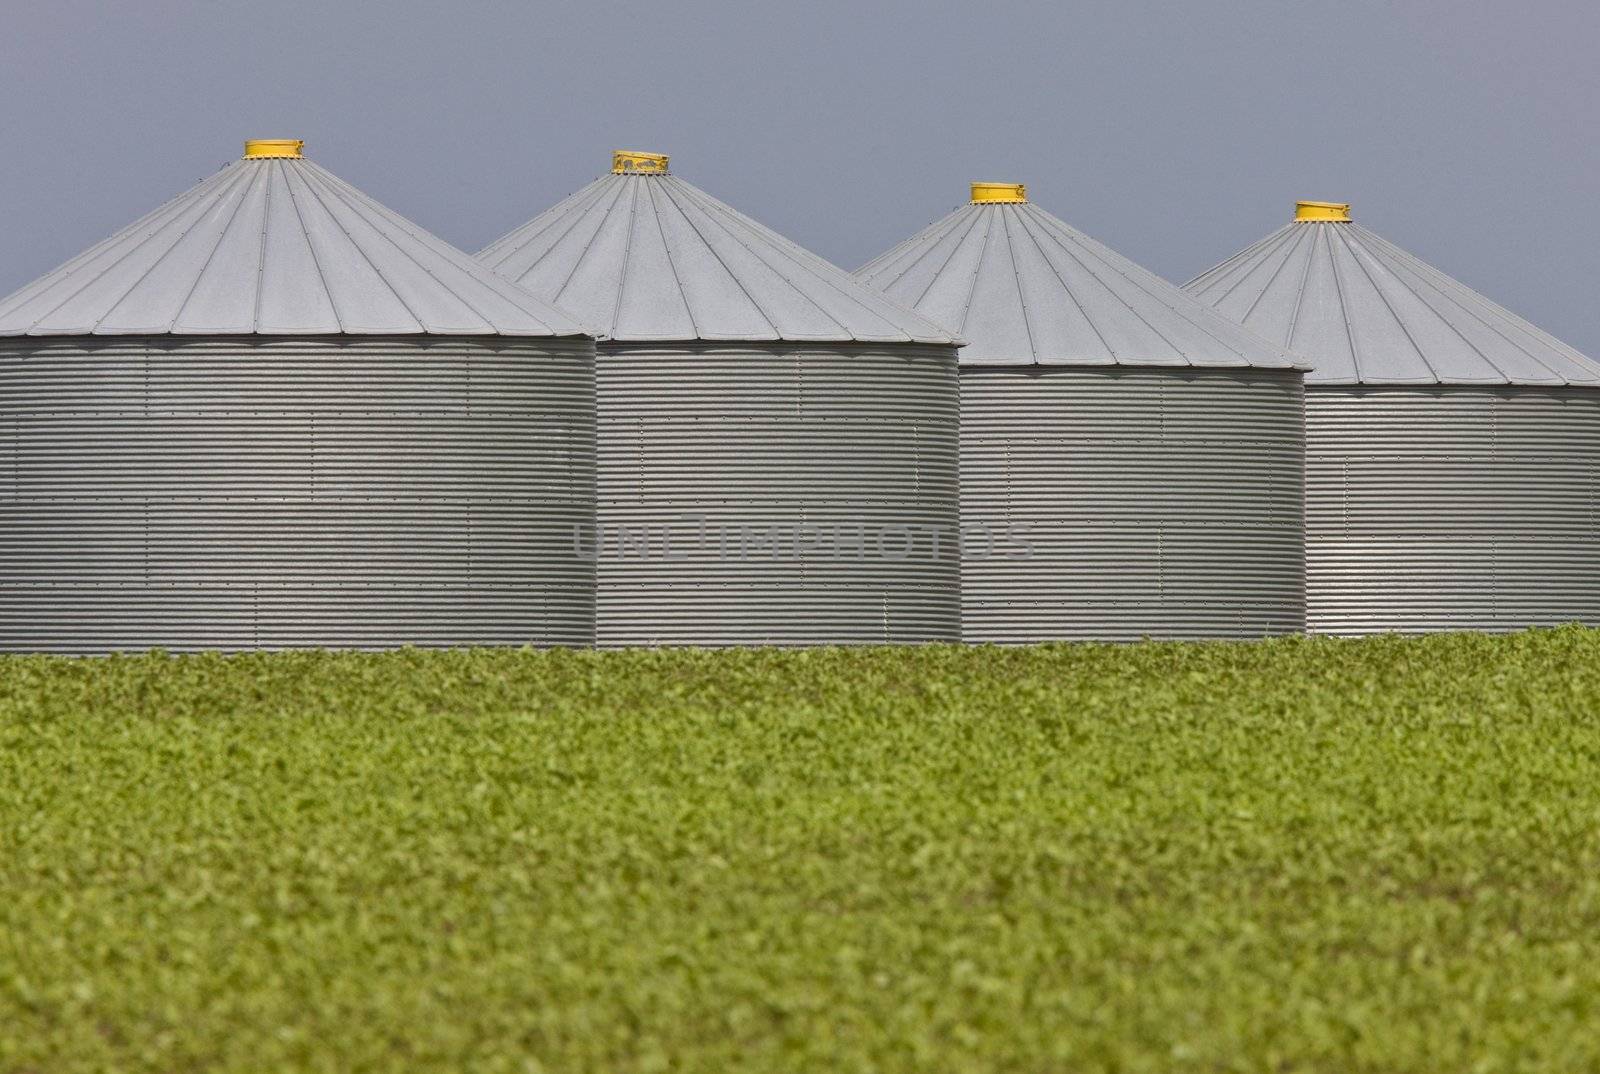 Agriculture Storage Bins Granaries by pictureguy